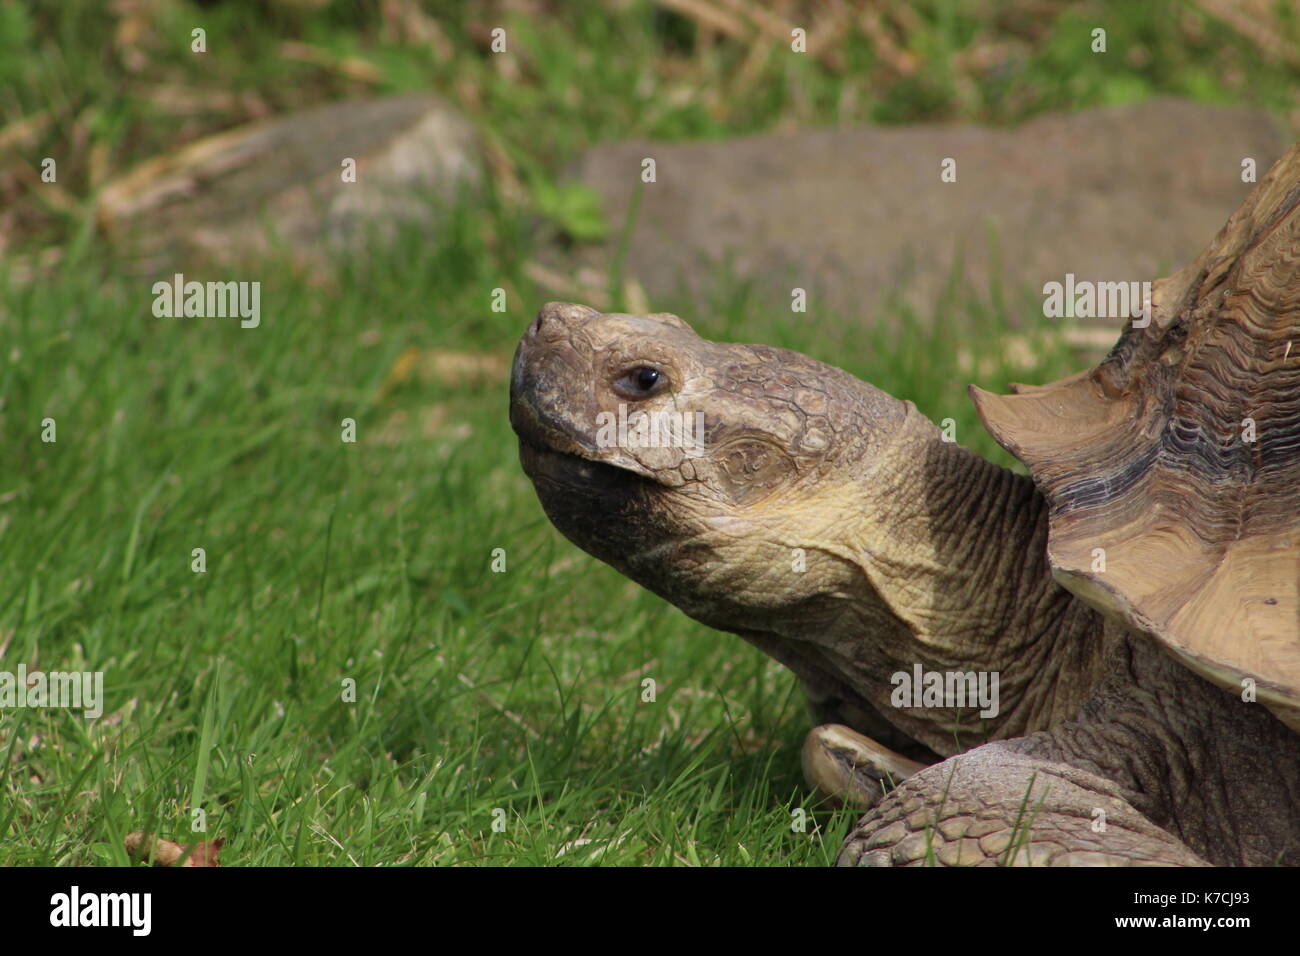 giant Tortoise Stock Photo